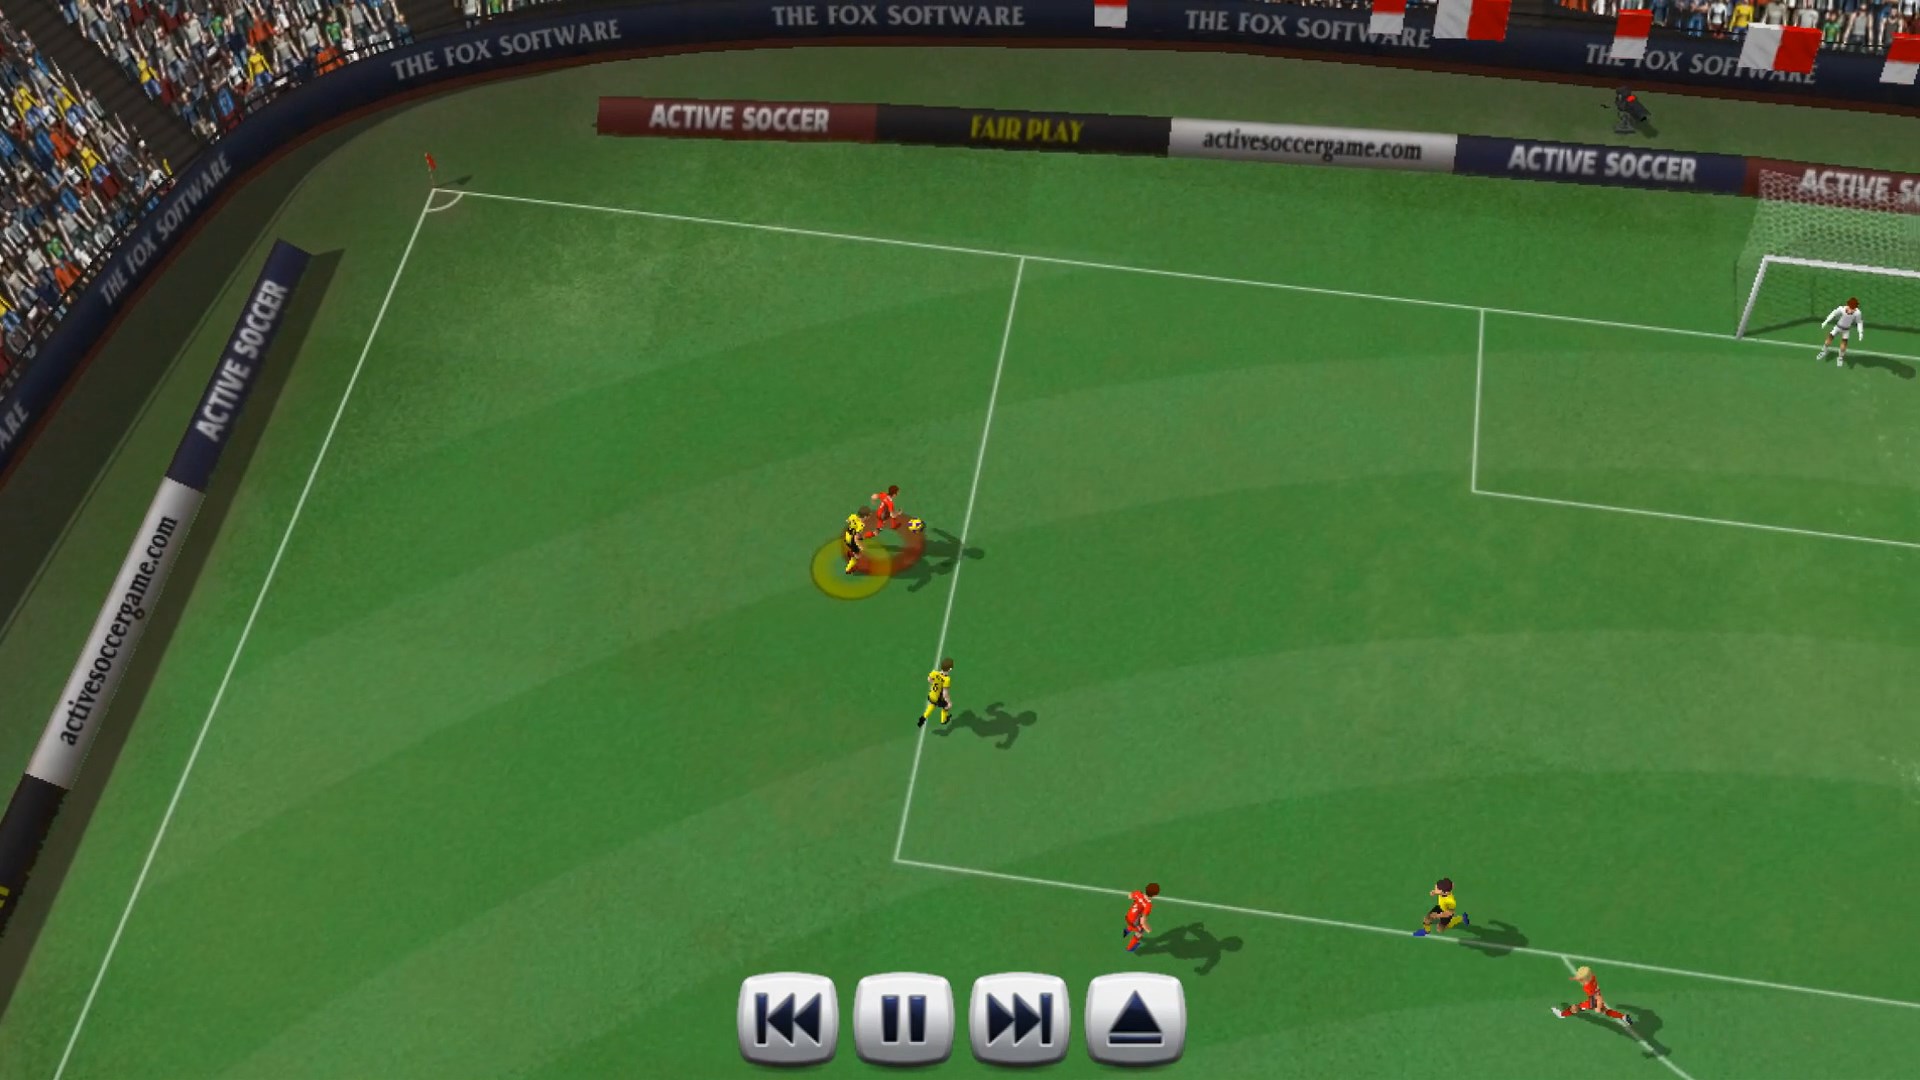 Футбол СОККЕР 2. Active game. Active Soccer. Active Soccer 2 DX PS Vita.